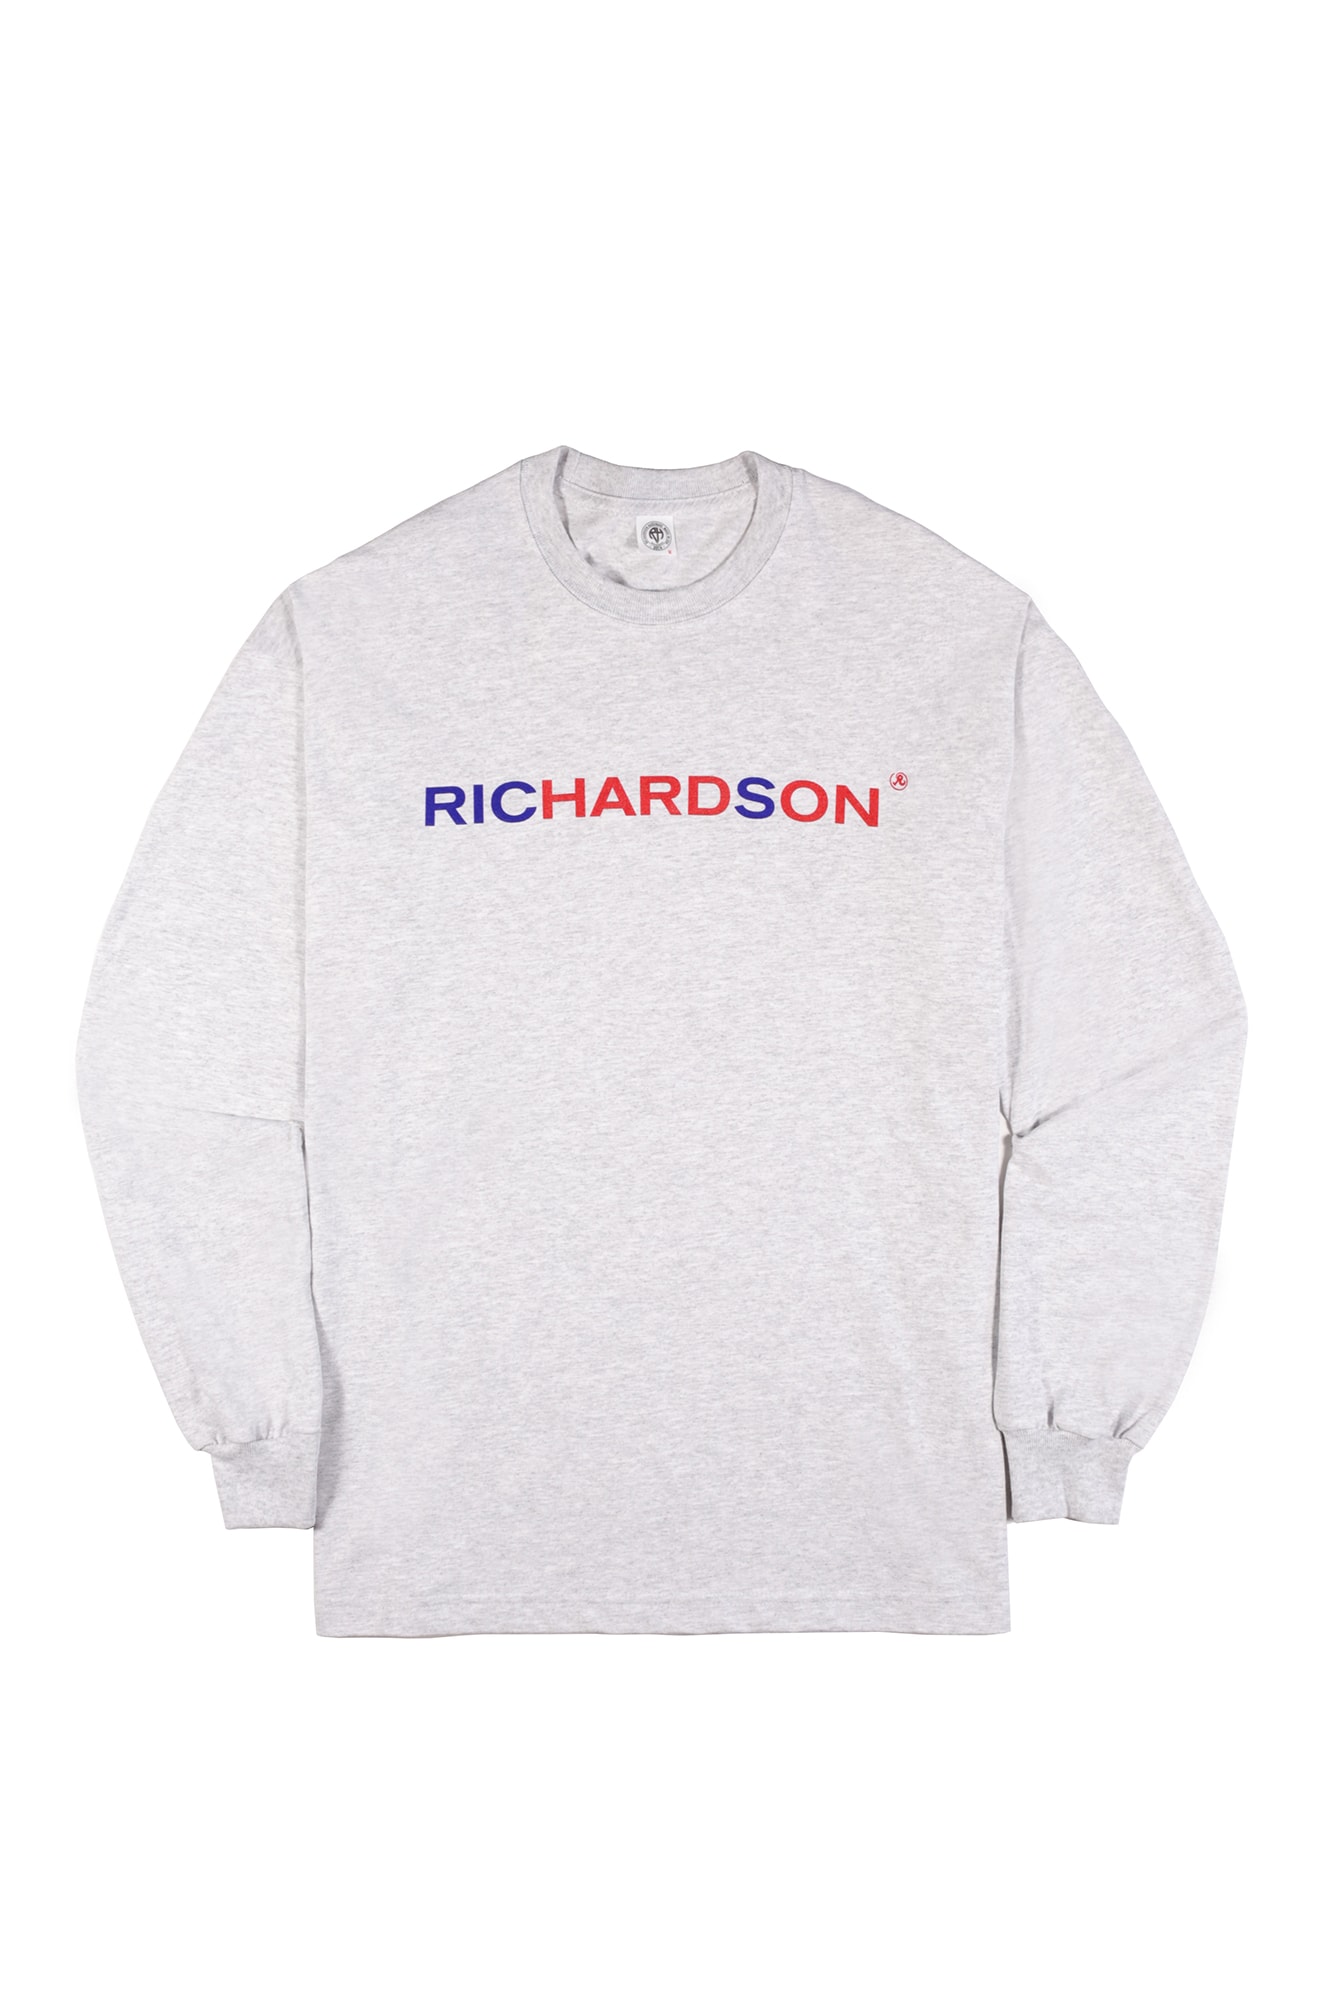 Richardson T-Shirt Collection logo release info pink grey black crewneck long-sleeve